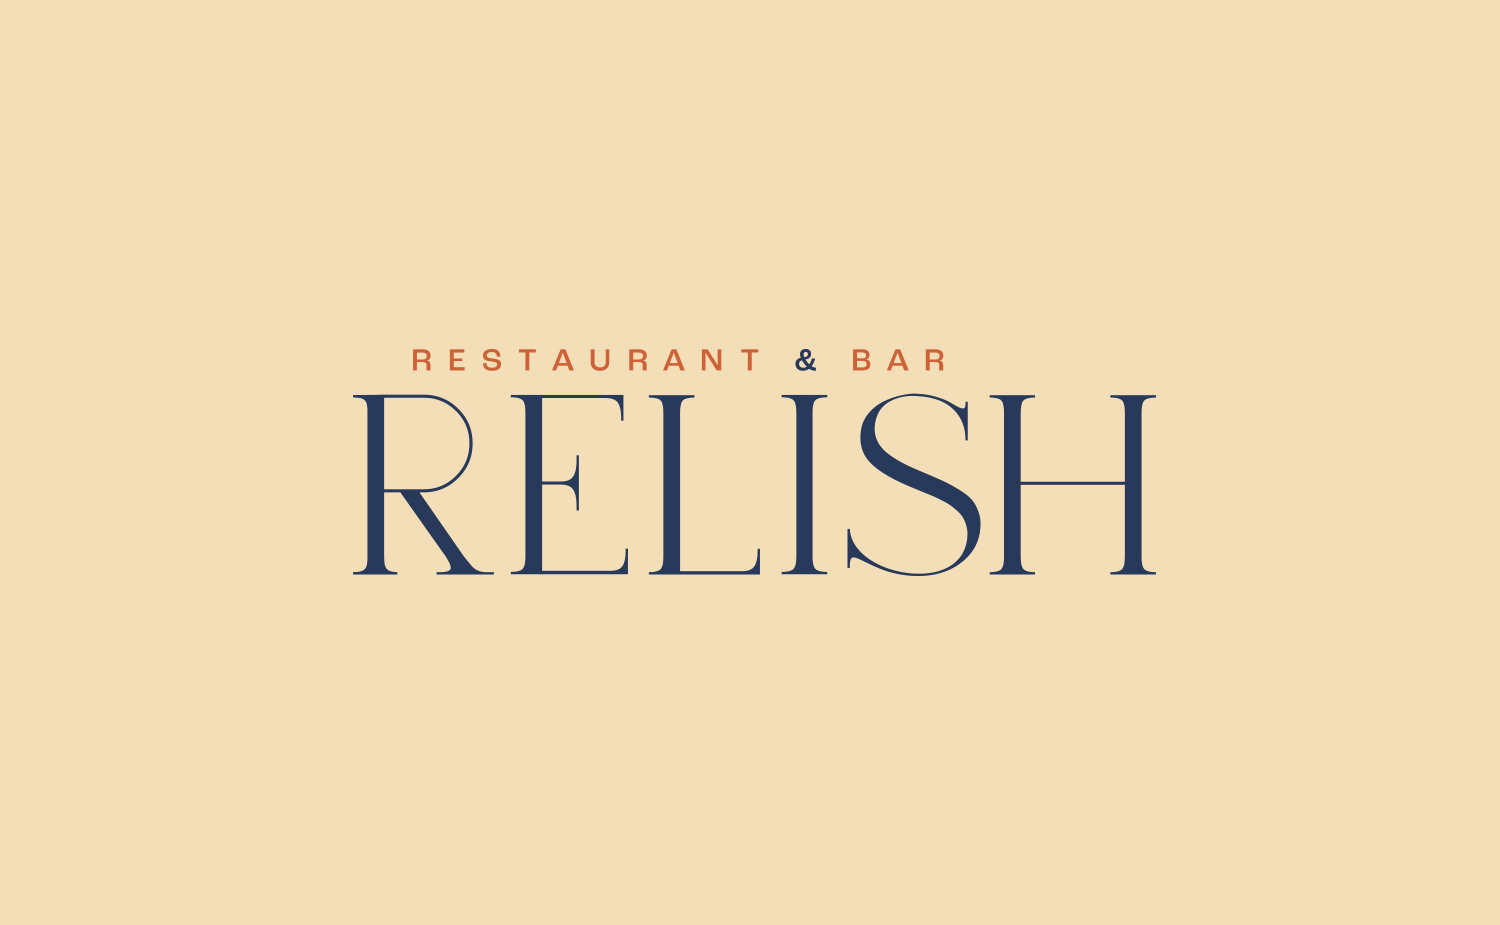 Relish Restaurant & Bar - Neiter Creative